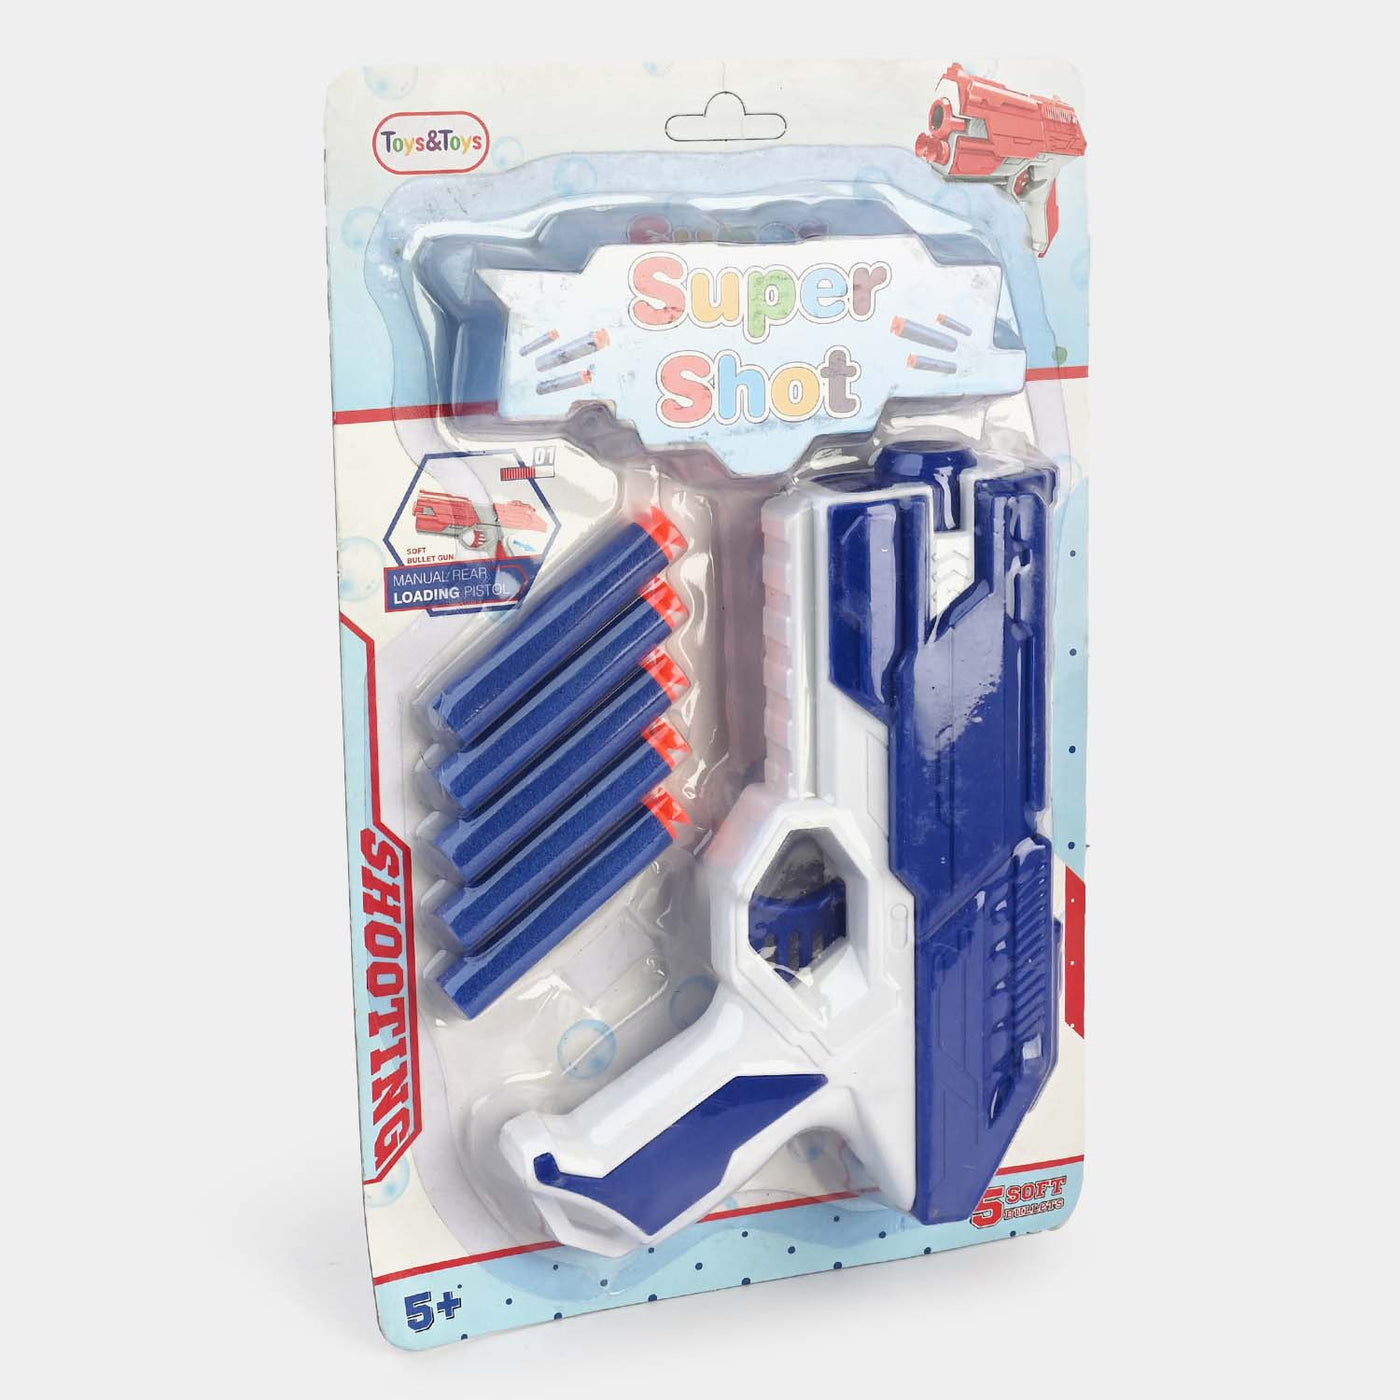 Soft Dart Target Toy -Blue